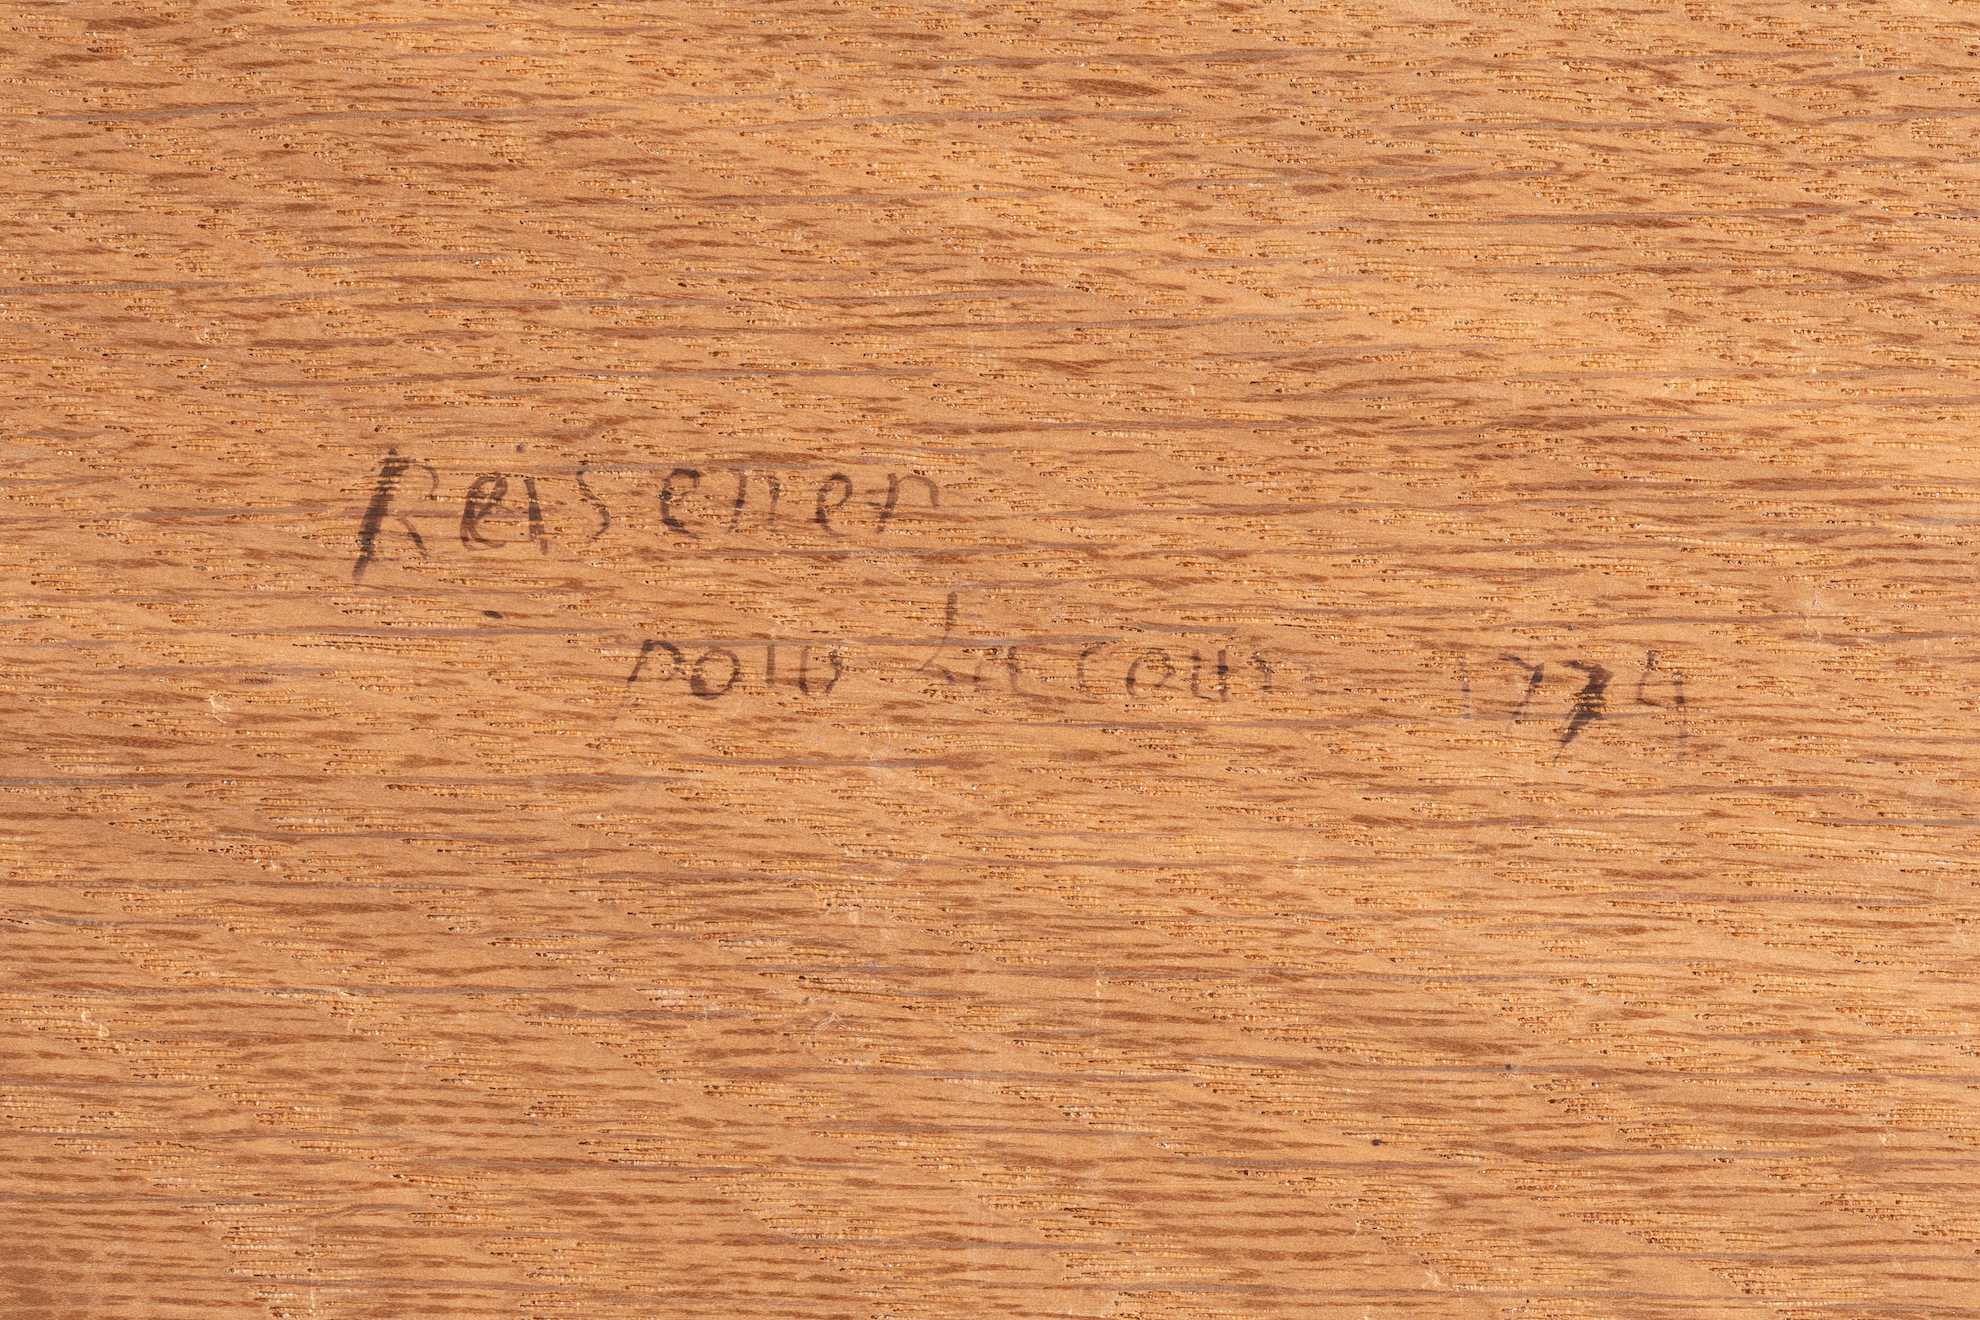 inscription underside of the drawer